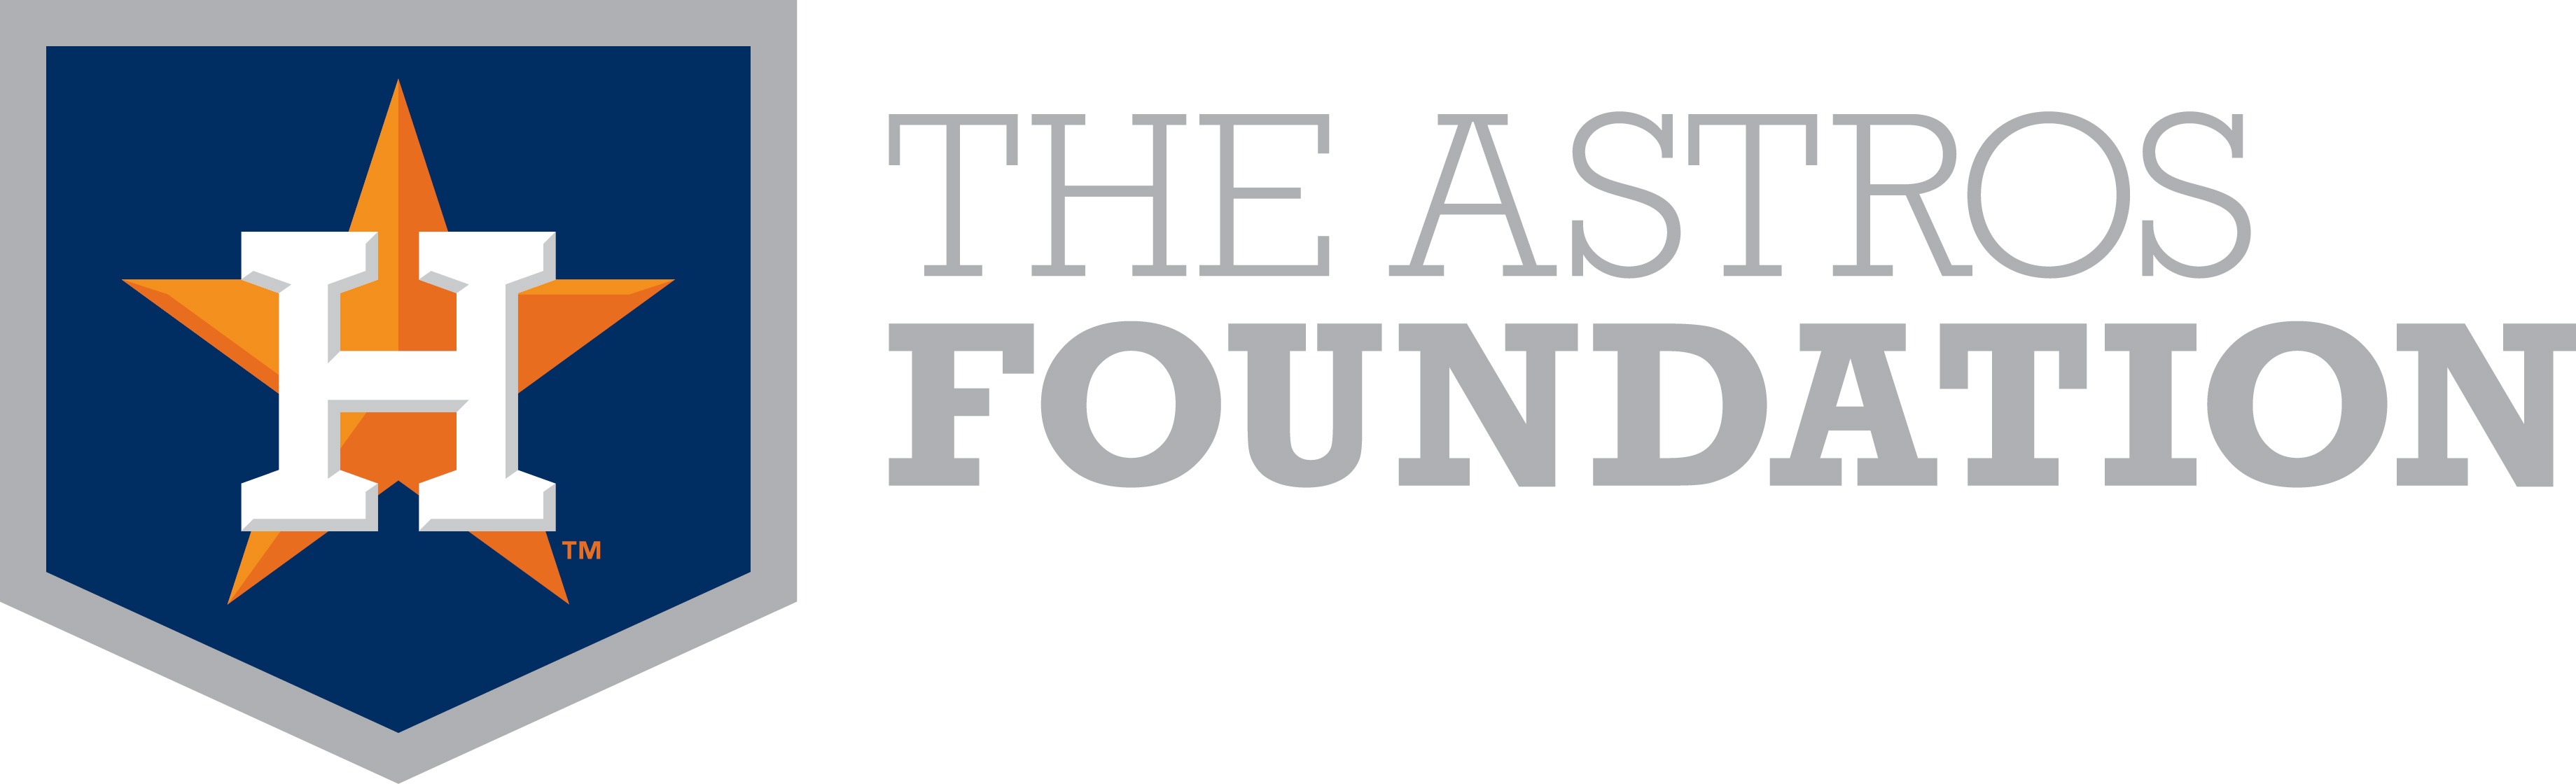 The Astros Foundation logo